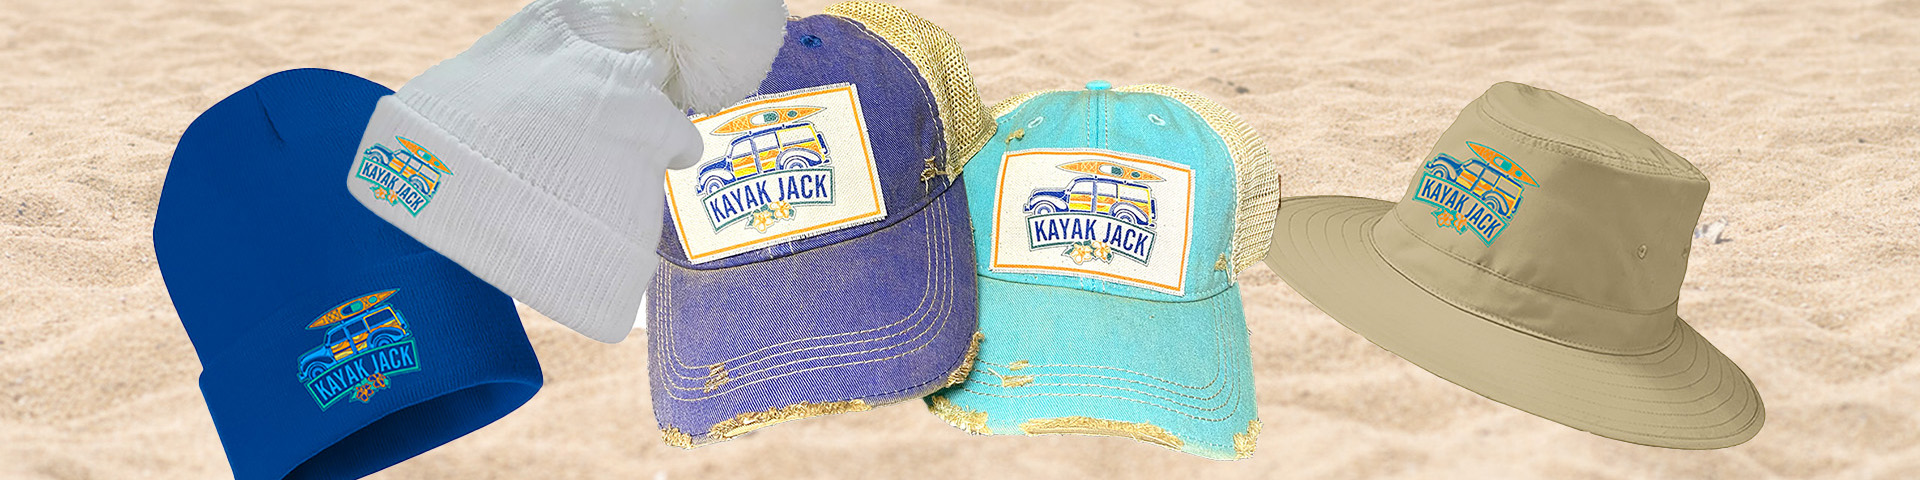 Navy Blue Old Favorite Trucker Cap Hat for Kayakers - Kayak Jack